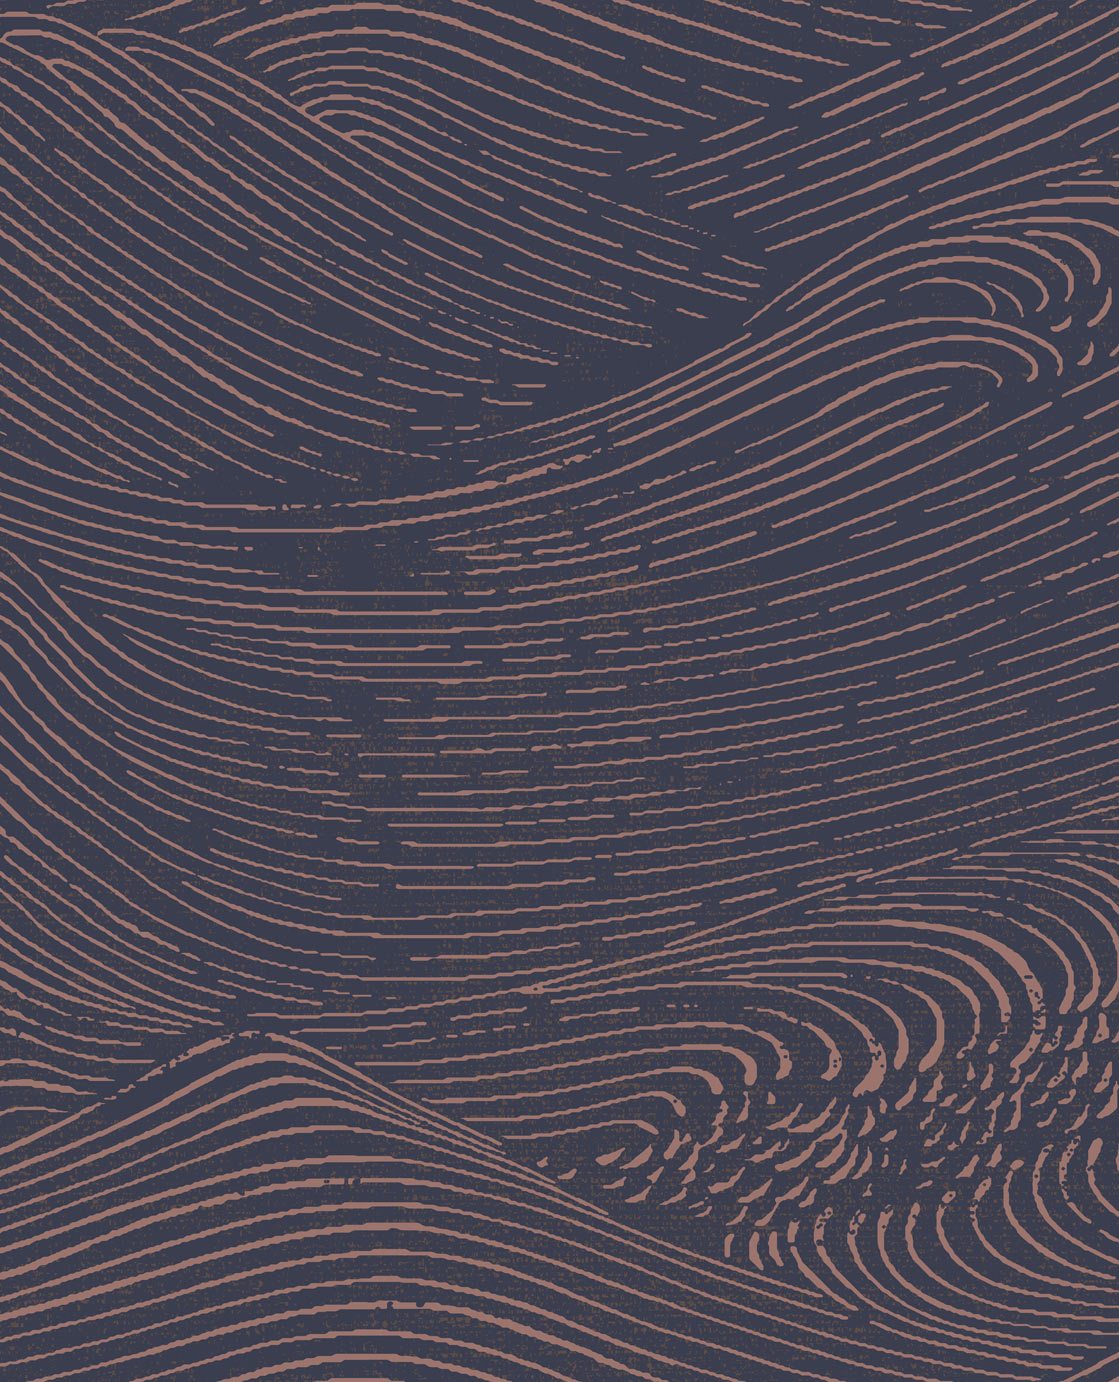 Enso Japanese Wave wallpaper